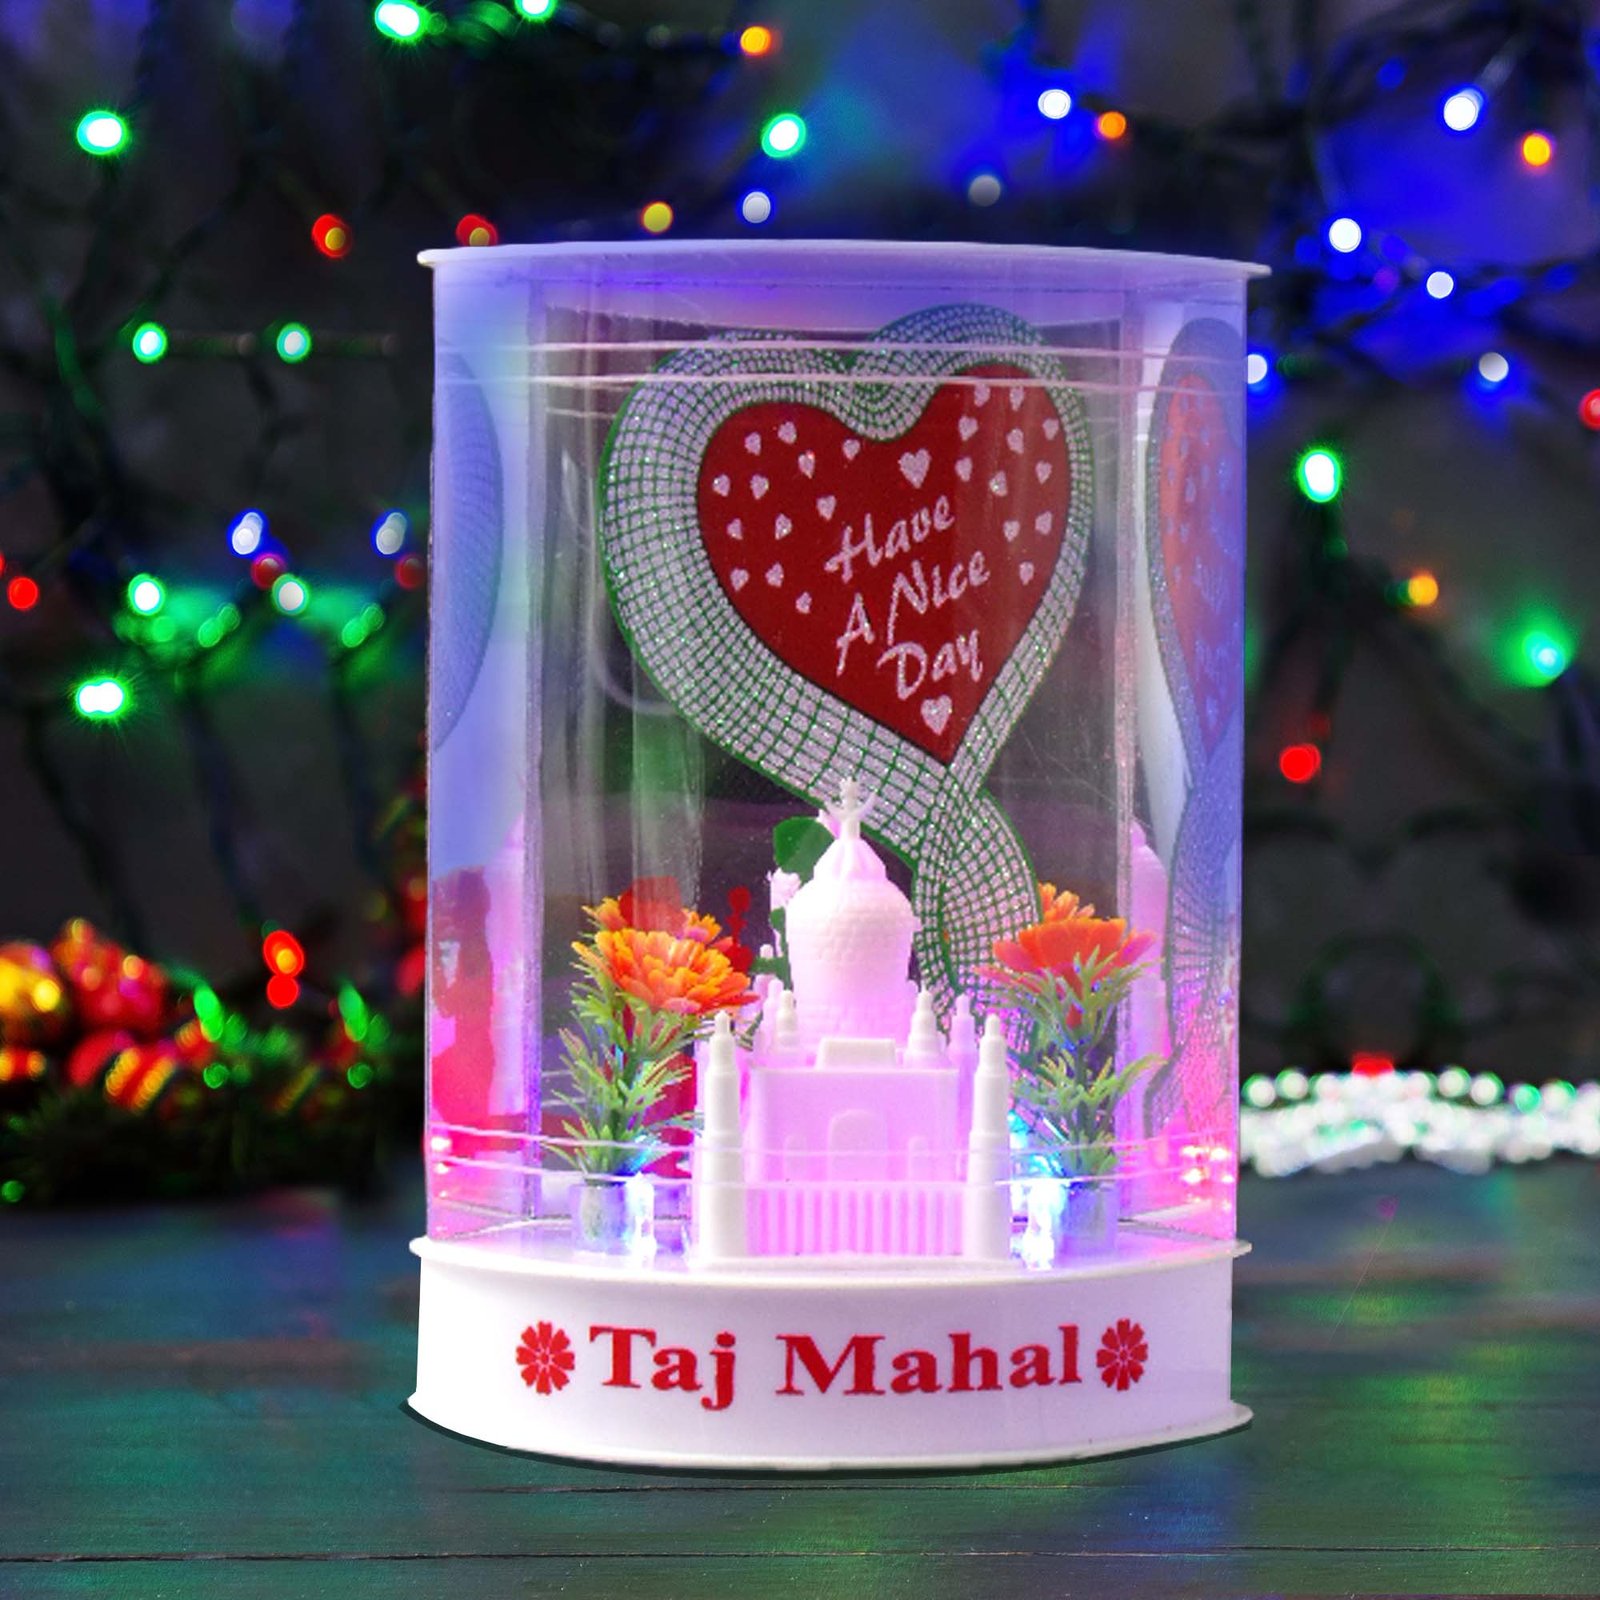 Discover more than 97 glass taj mahal gift